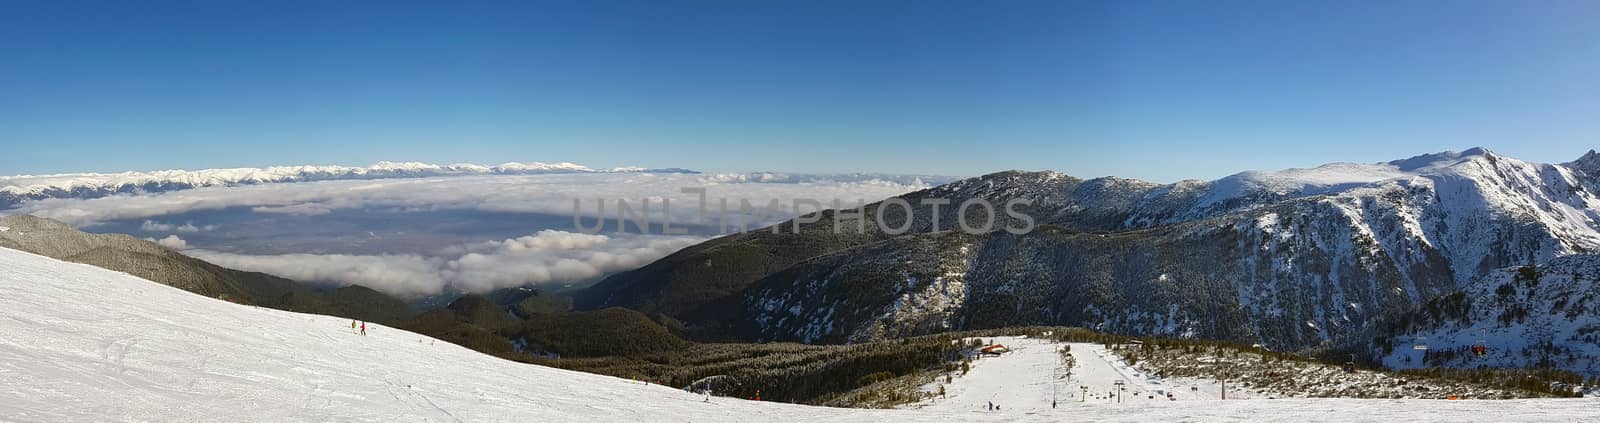 High mountain ski resort by savcoco